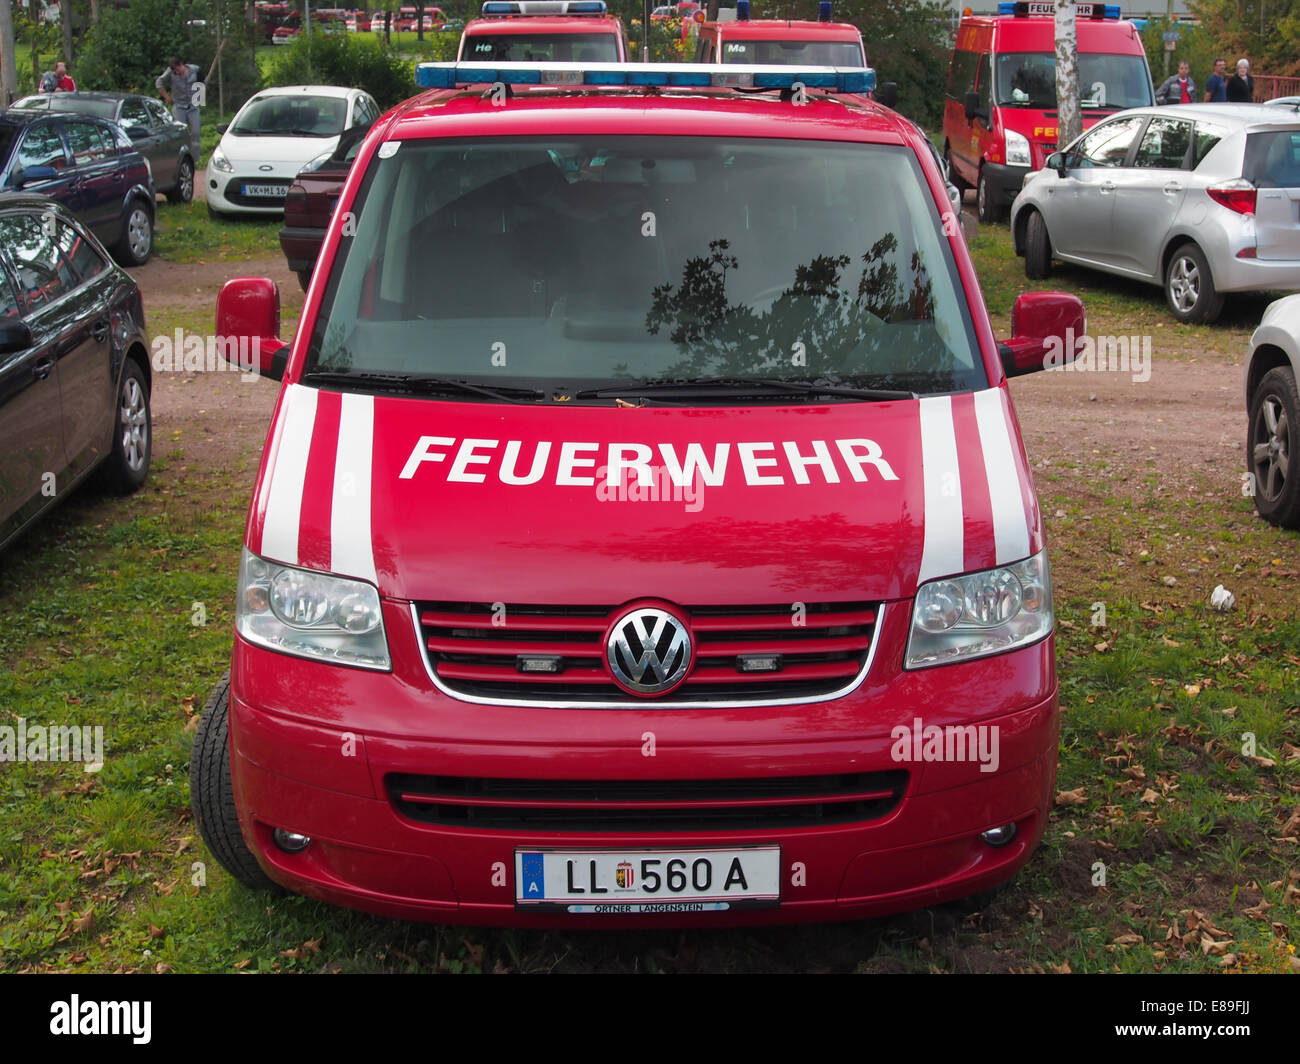 Volkswagen, Freiwillige Feuerwehr Ansfelden, Grenzlandmeisterschaften 2014, bild 1 Stock Photo